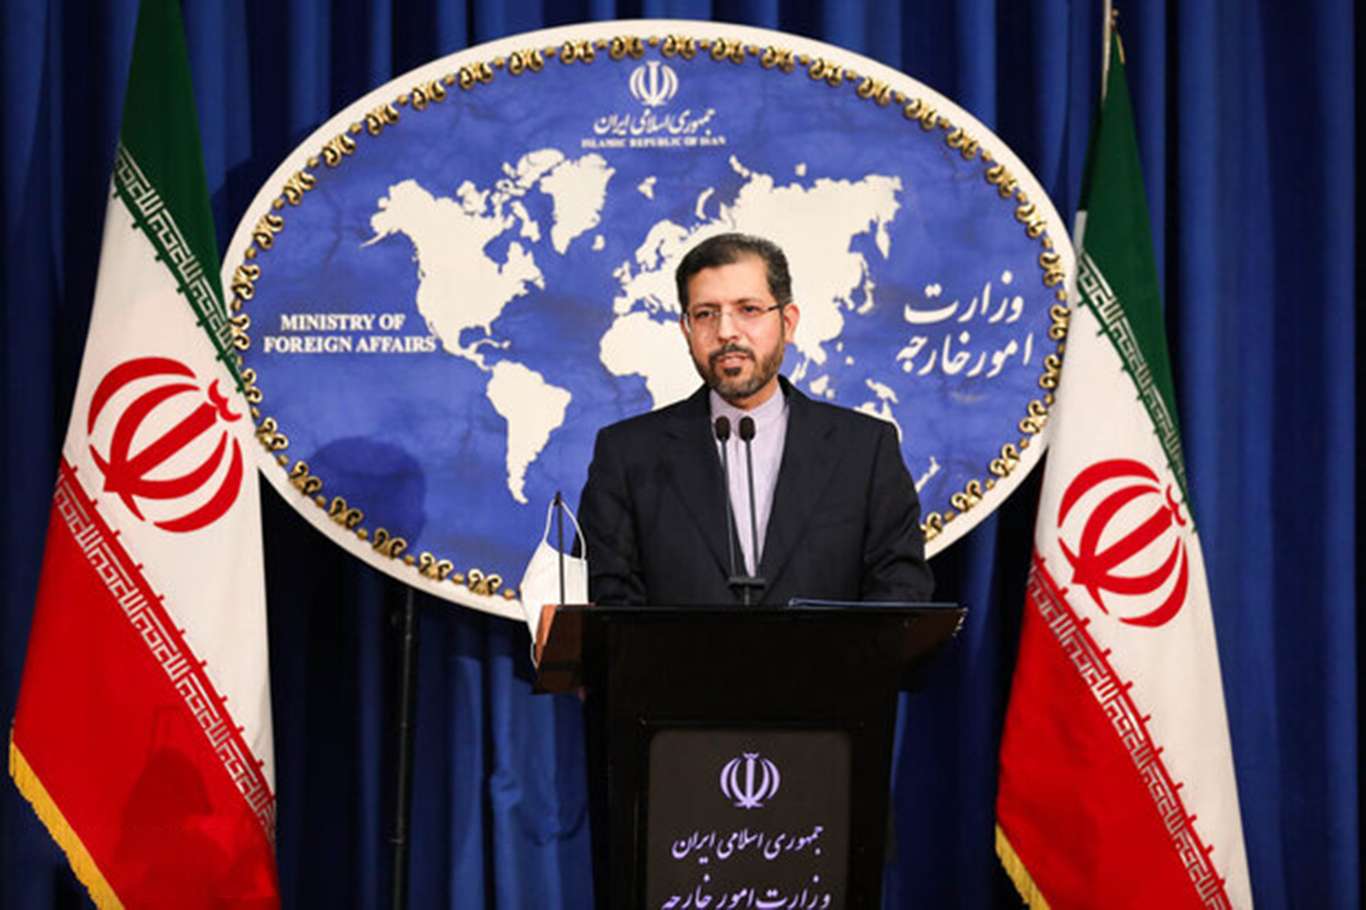 İran'dan Reuters'in Haberine Yalanlama